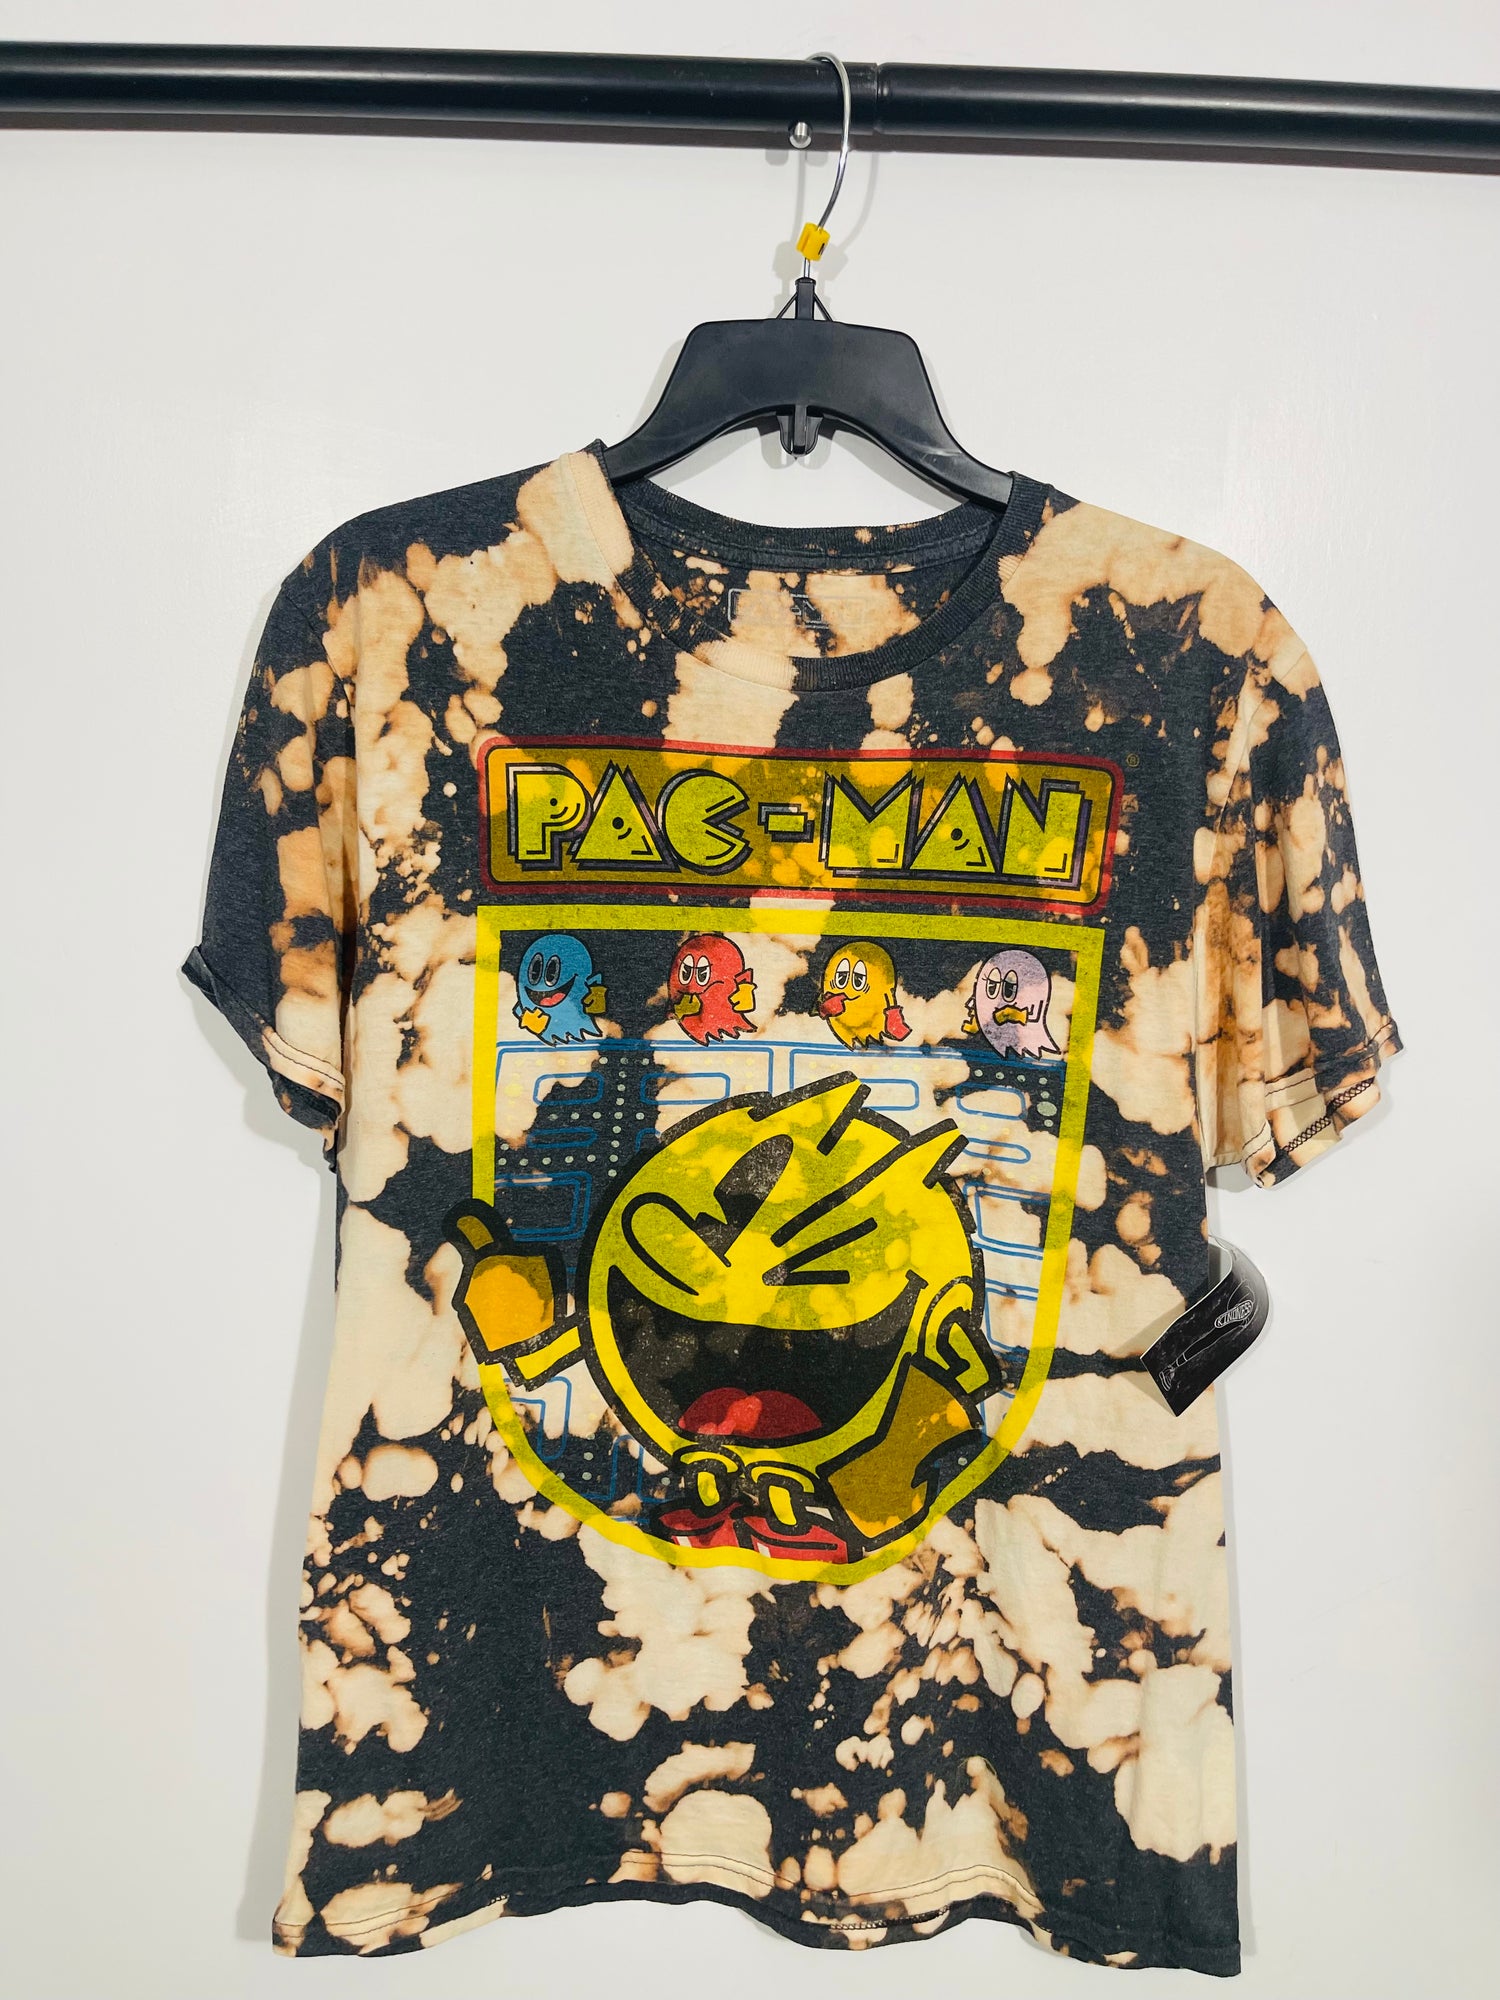 Unisex Medium Pac-Man Tee - Kicks and Kindness - Shirts & Tops -